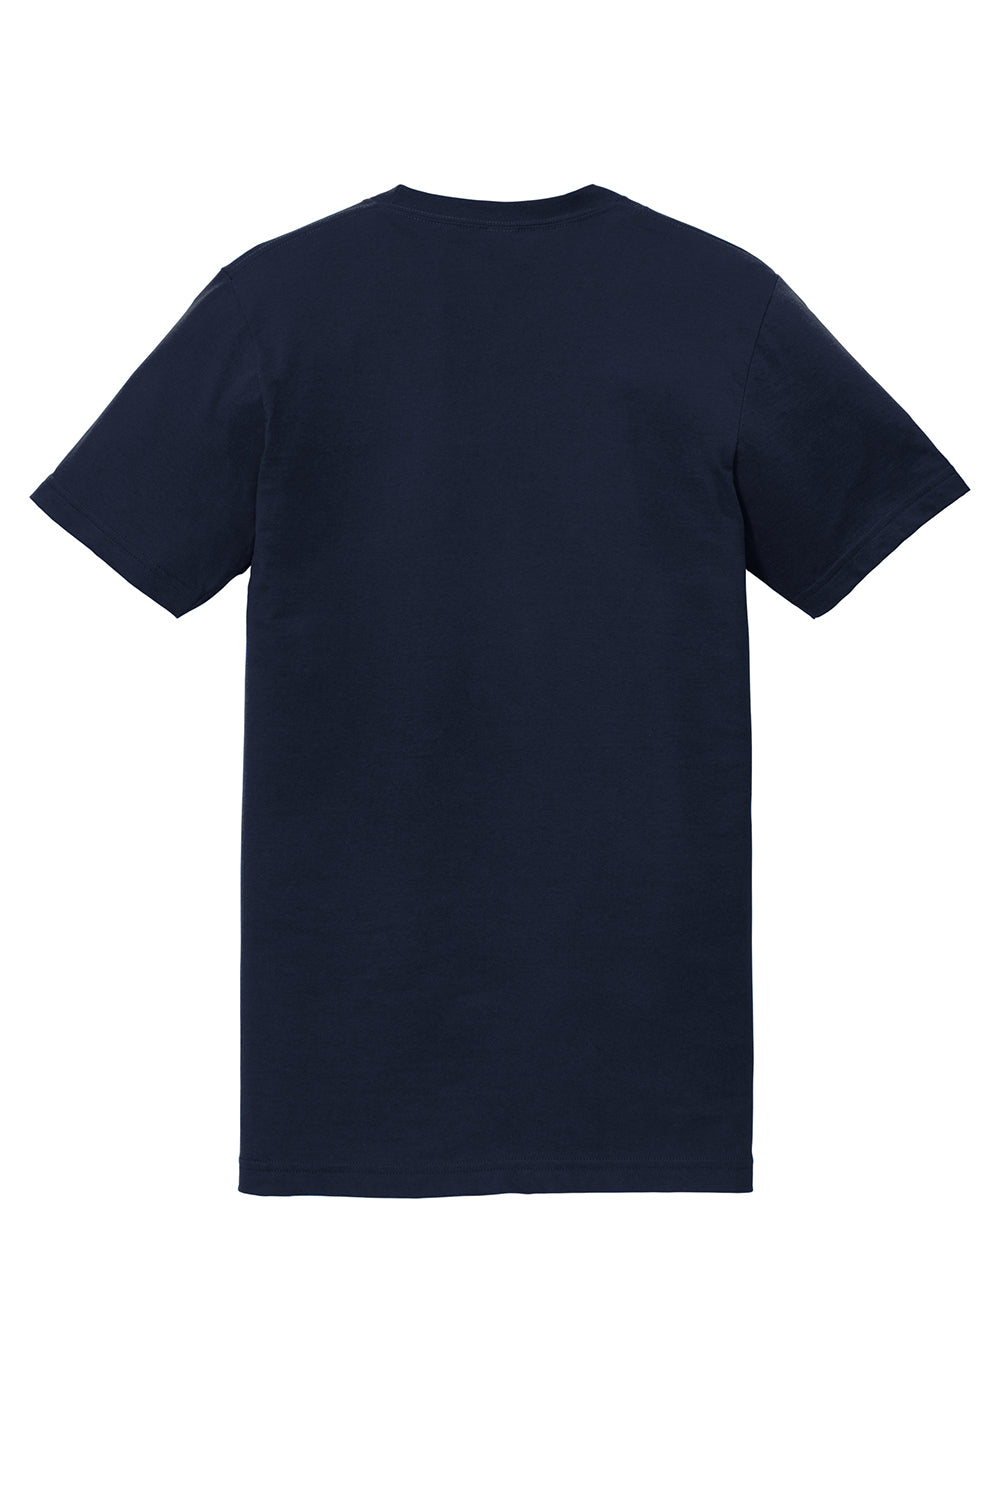 American Apparel 2001 Mens Fine Jersey Short Sleeve Crewneck T-Shirt Navy Blue Flat Back